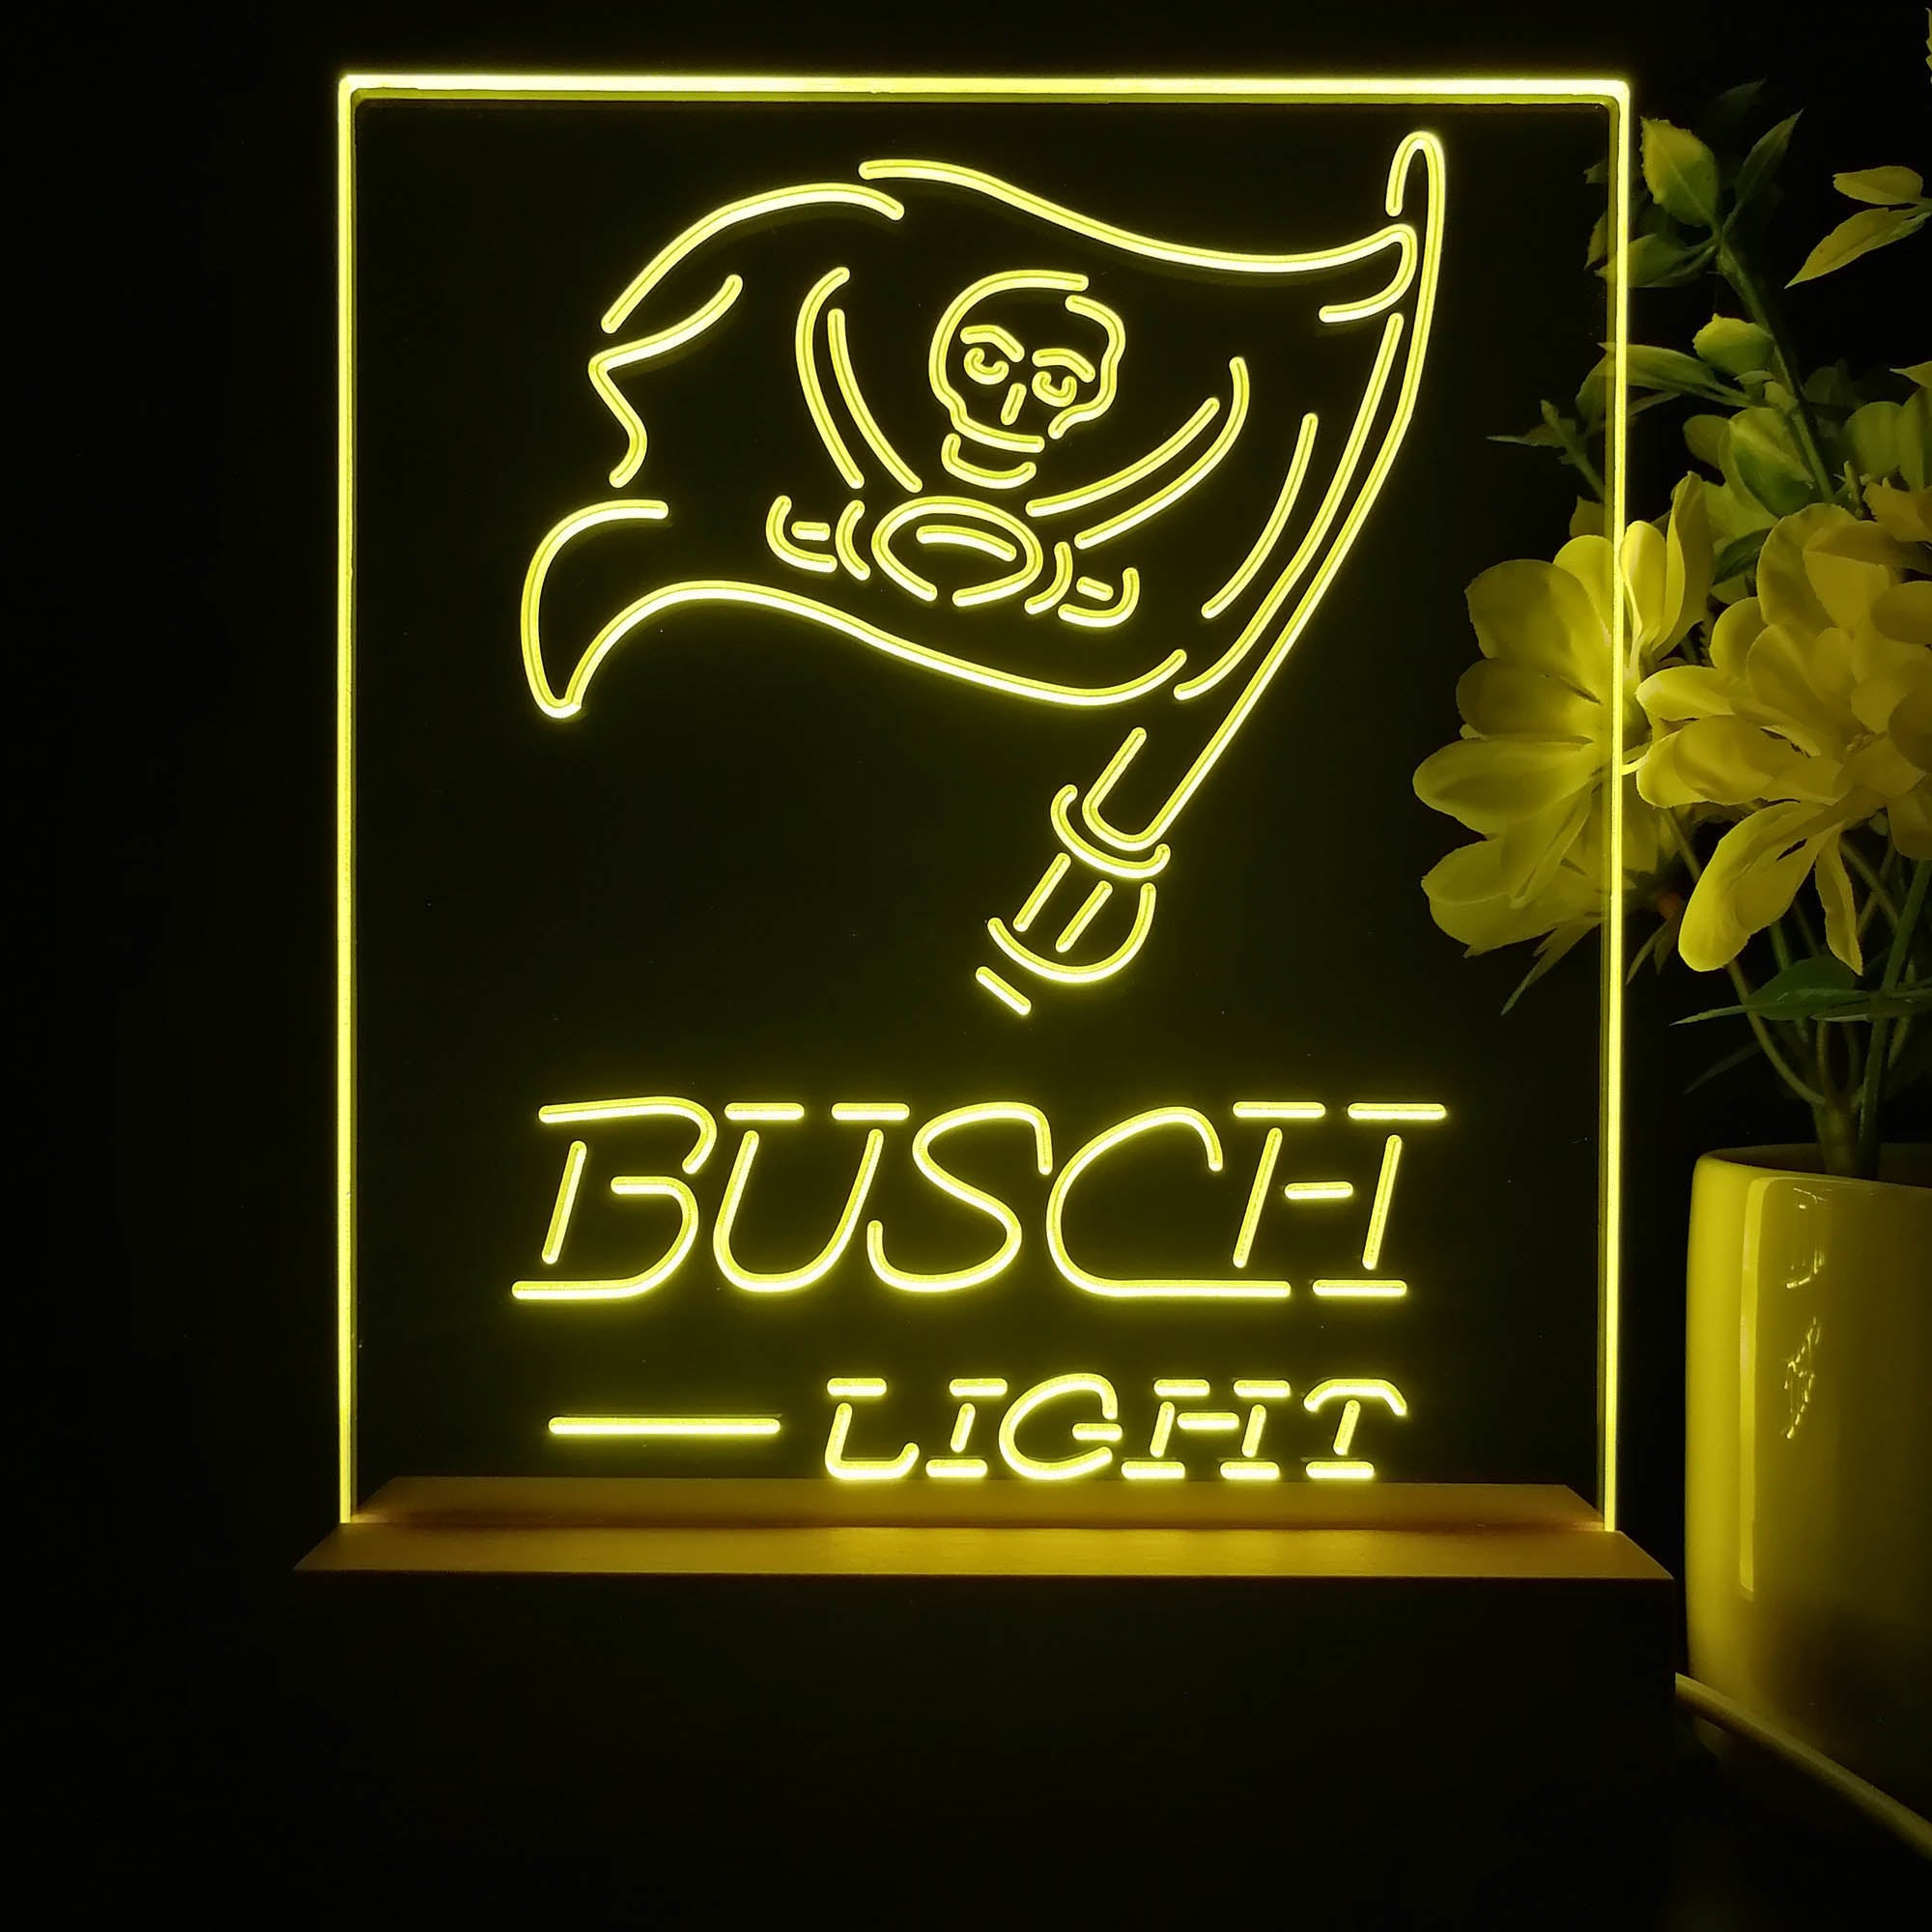 Tampa Bay Buccaneers Busch Light Neon Sign Pub Bar Lamp